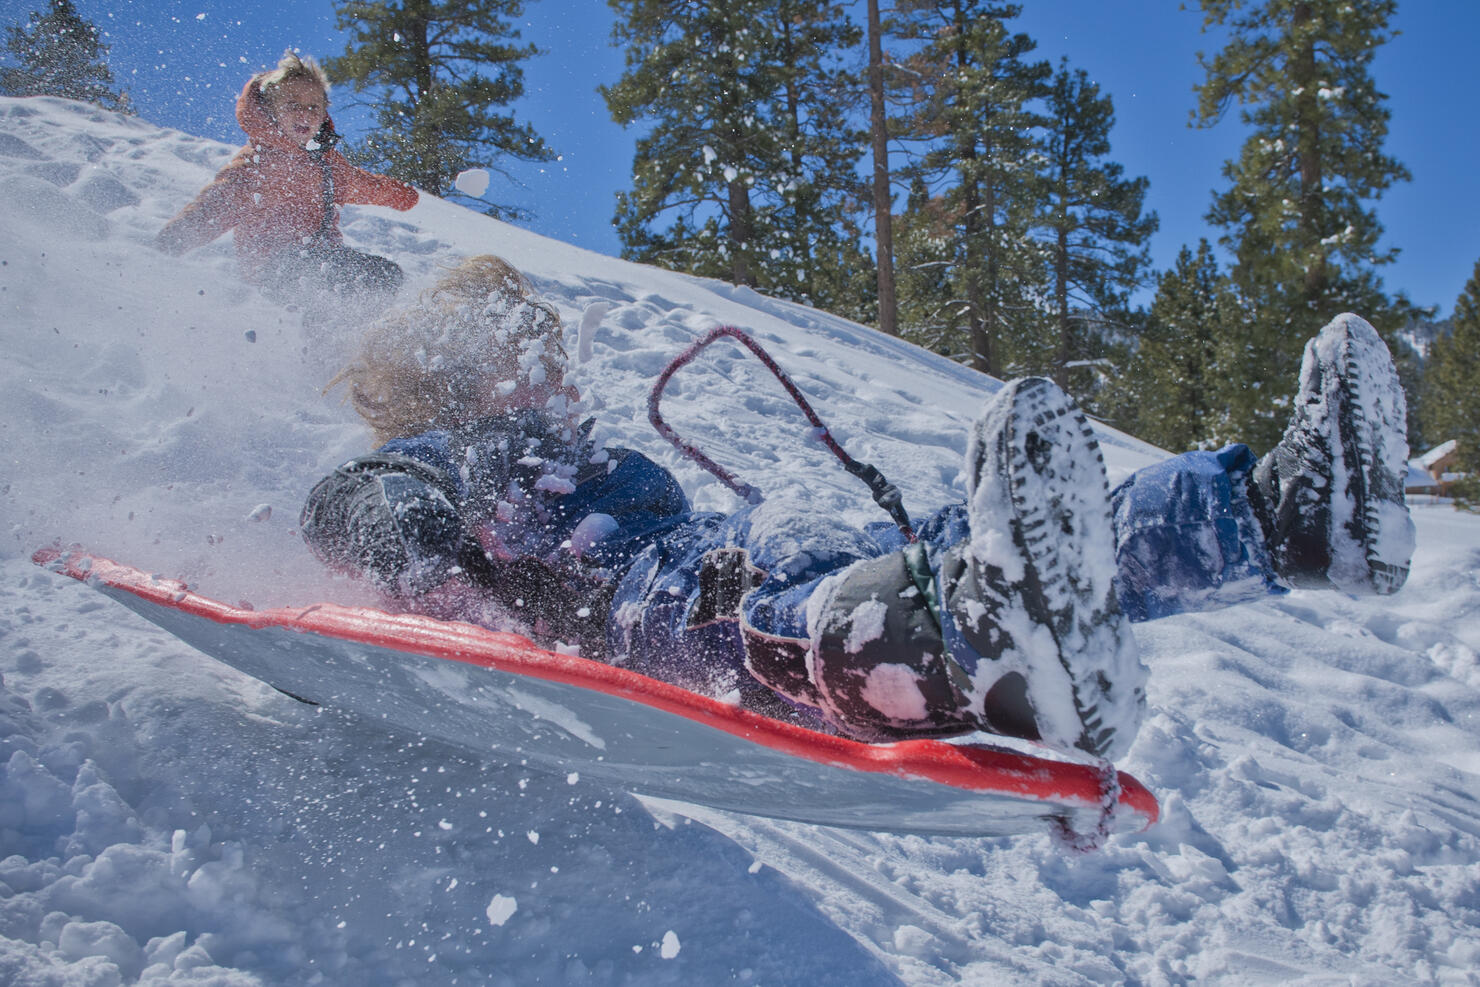 small boy on sled crashing through snow